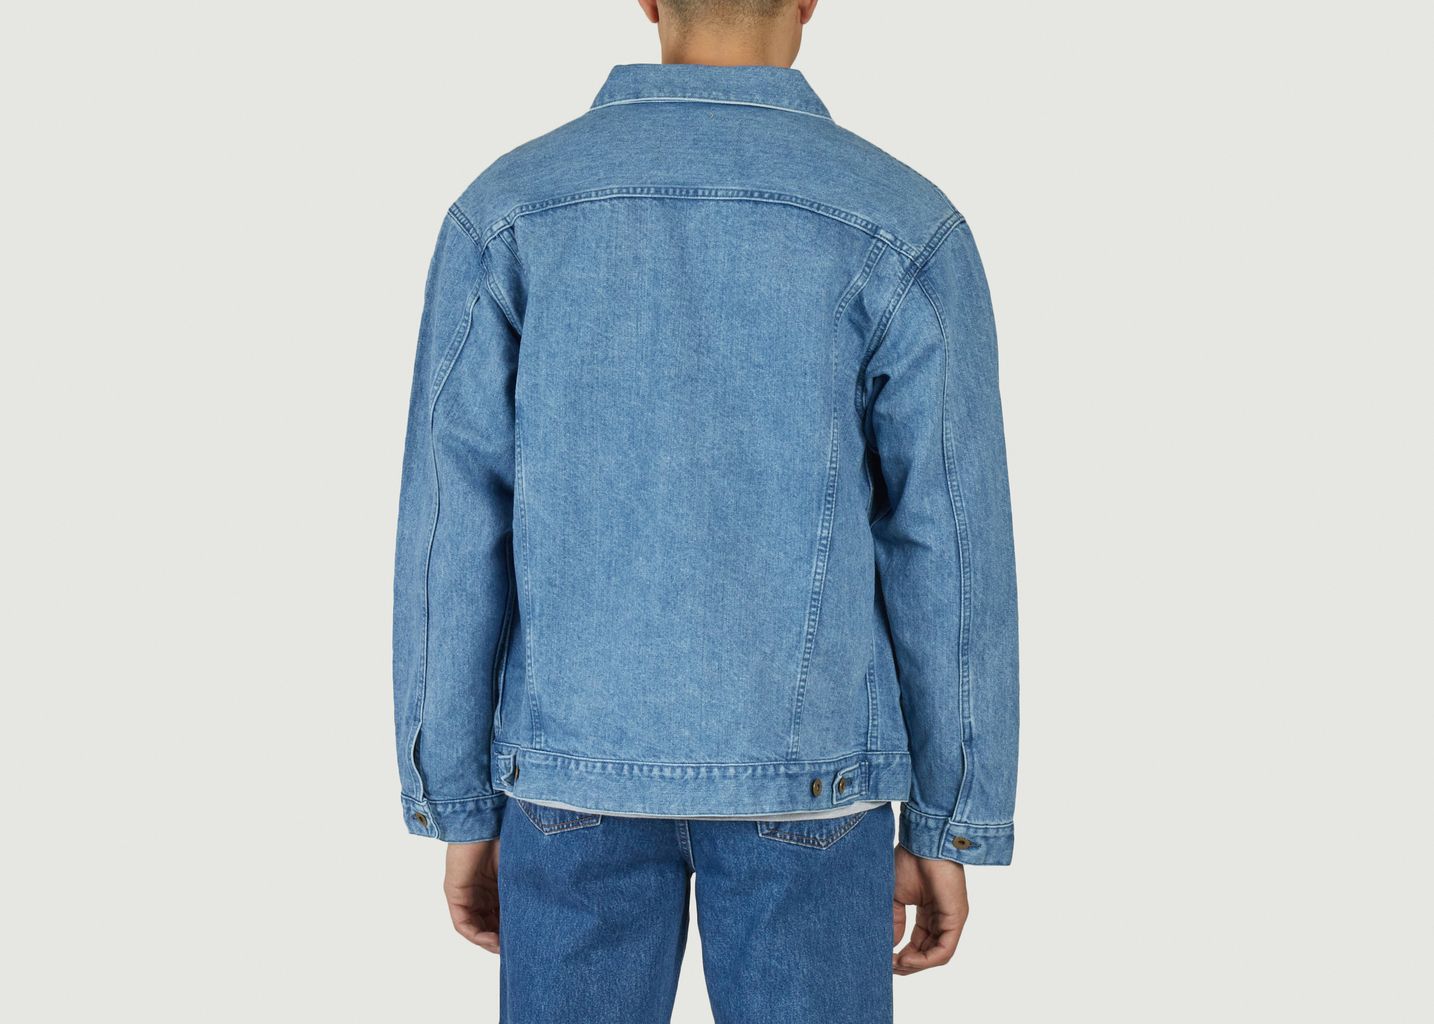 Kouzo faded denim jacket (楮-コウゾ) - Japan Blue Jeans